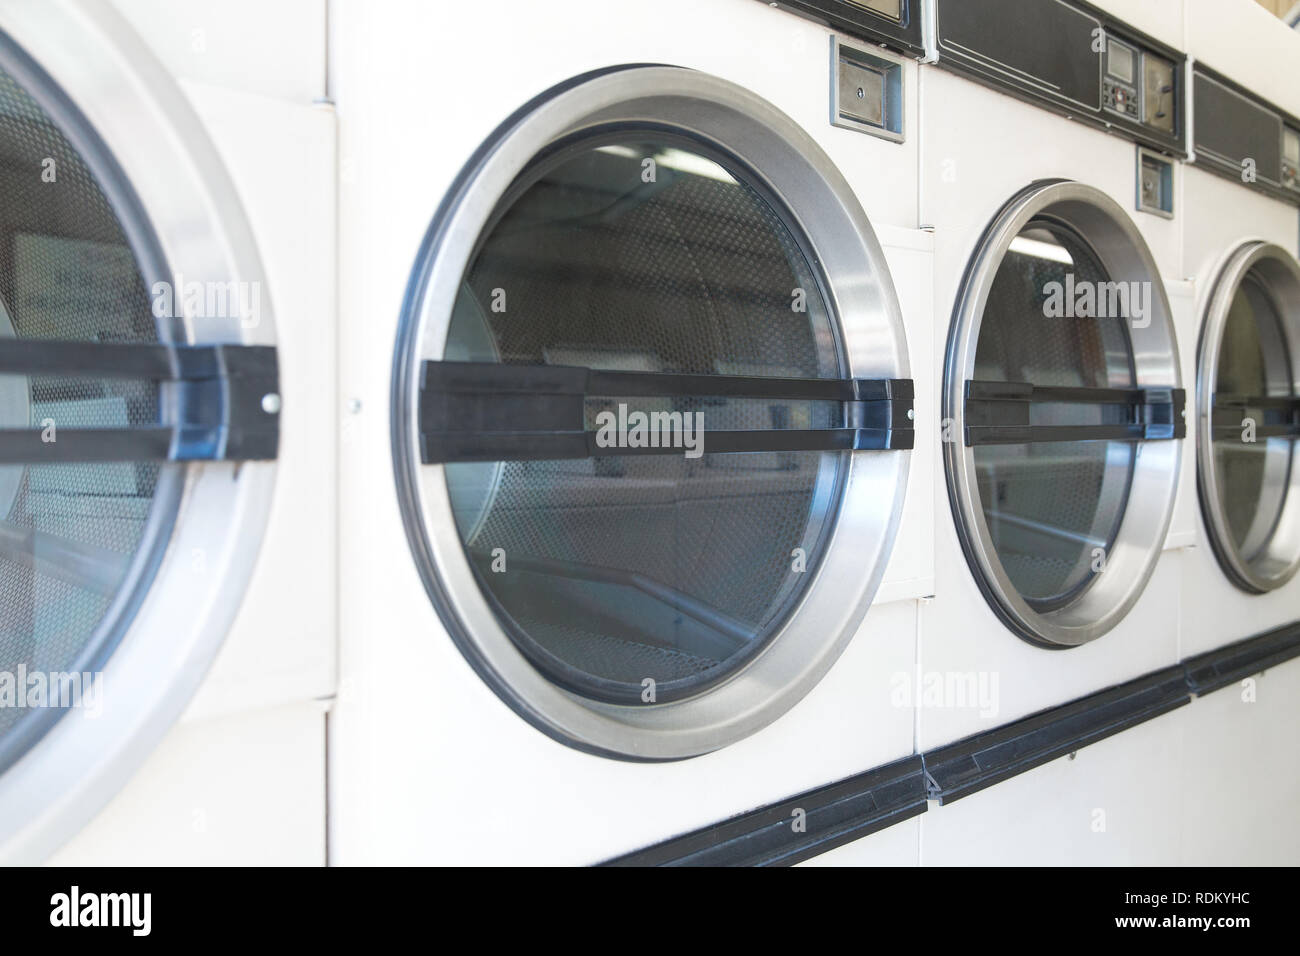 washing machines at laundromat Stock Photo